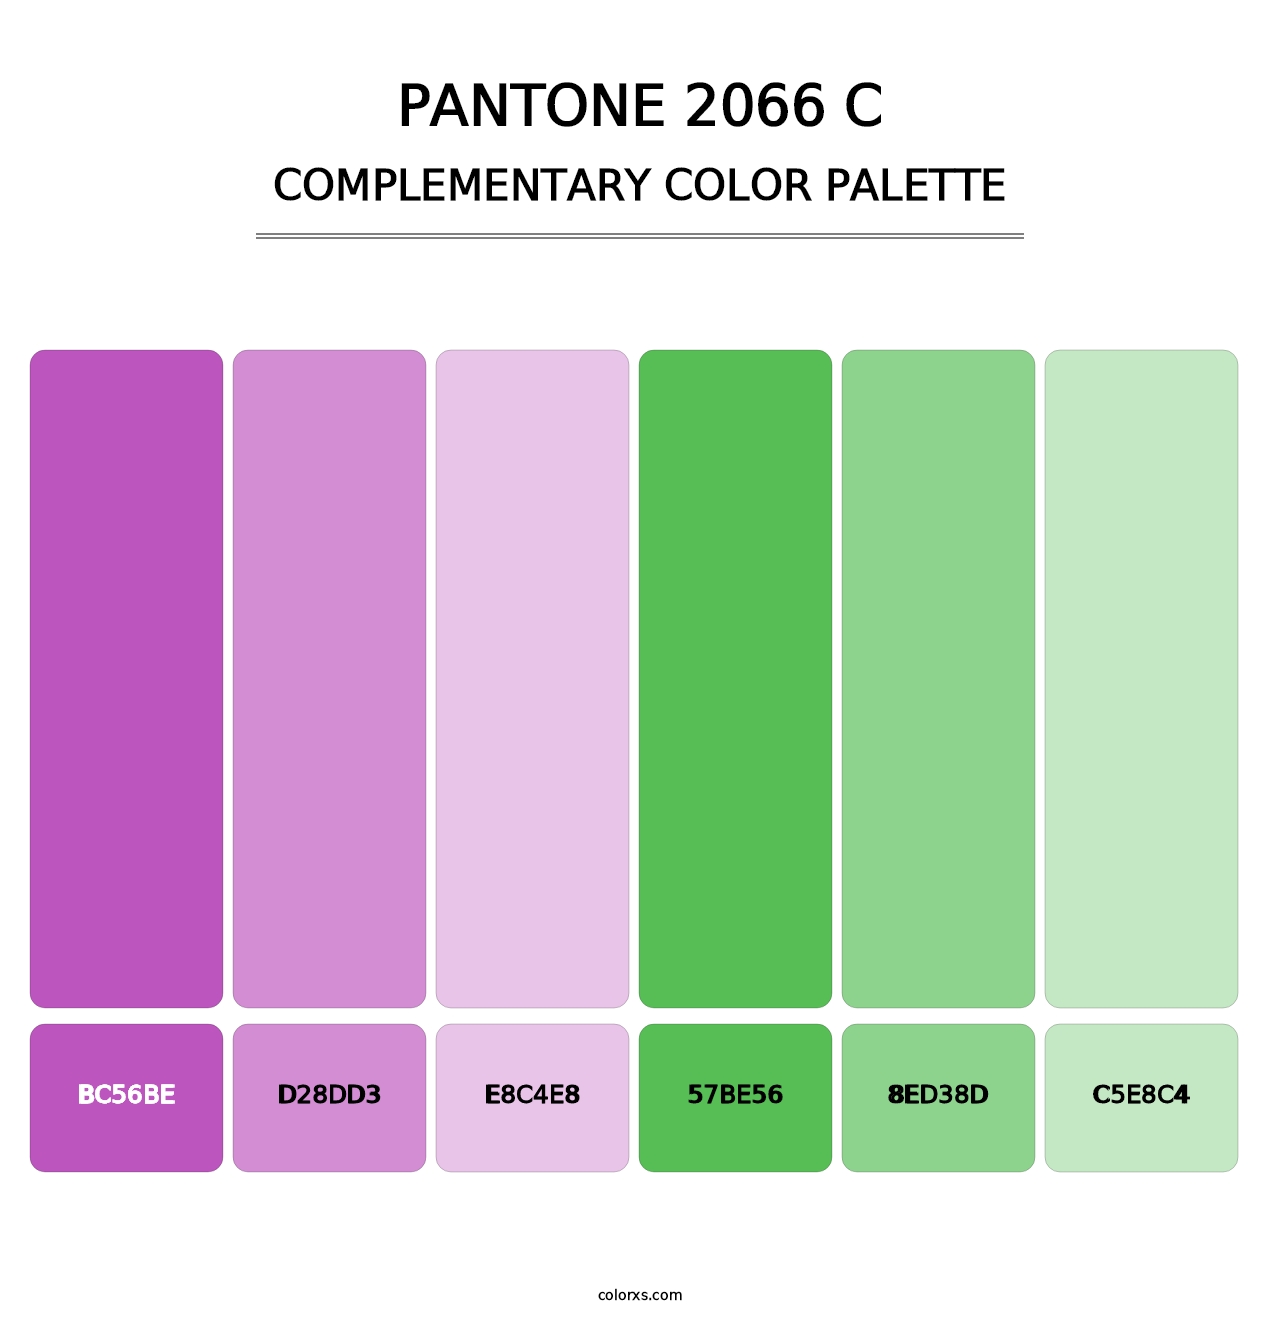 PANTONE 2066 C - Complementary Color Palette